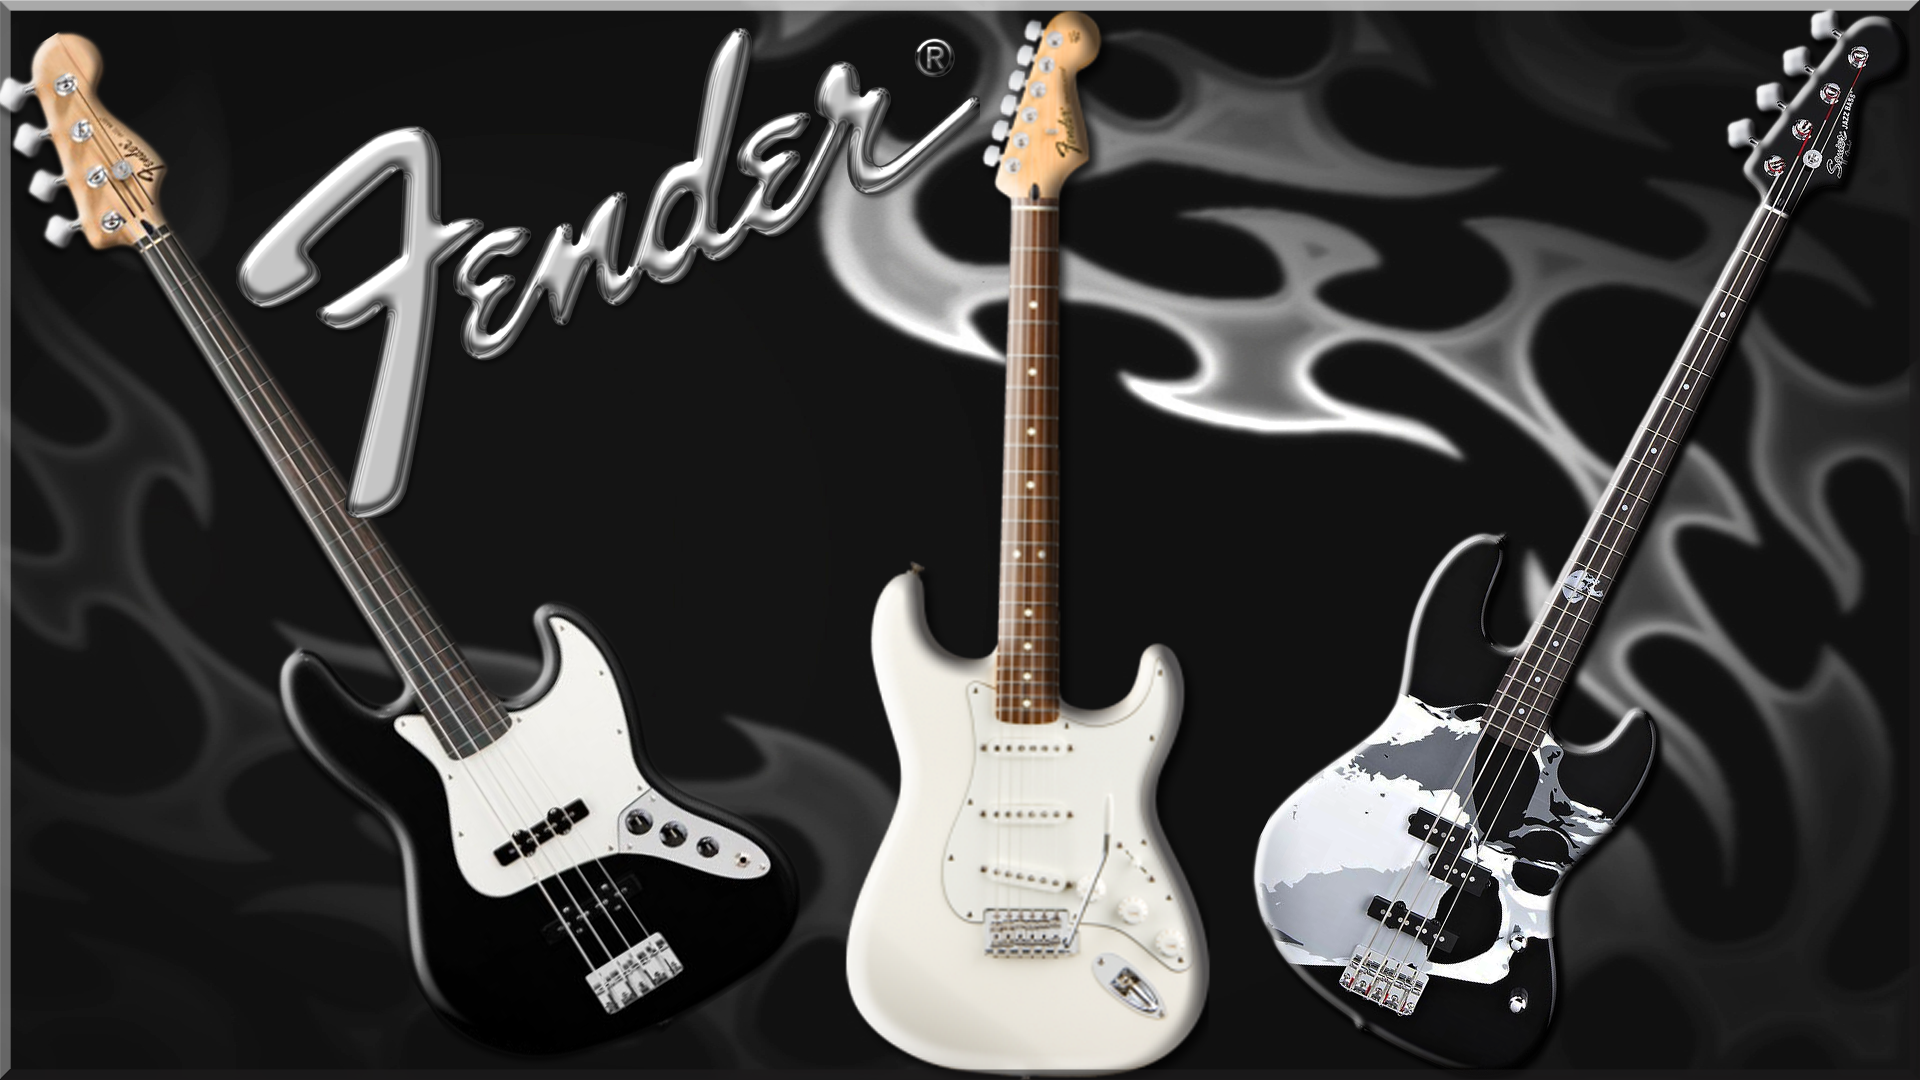 Fender Guitars Full HD Wallpaper And Background